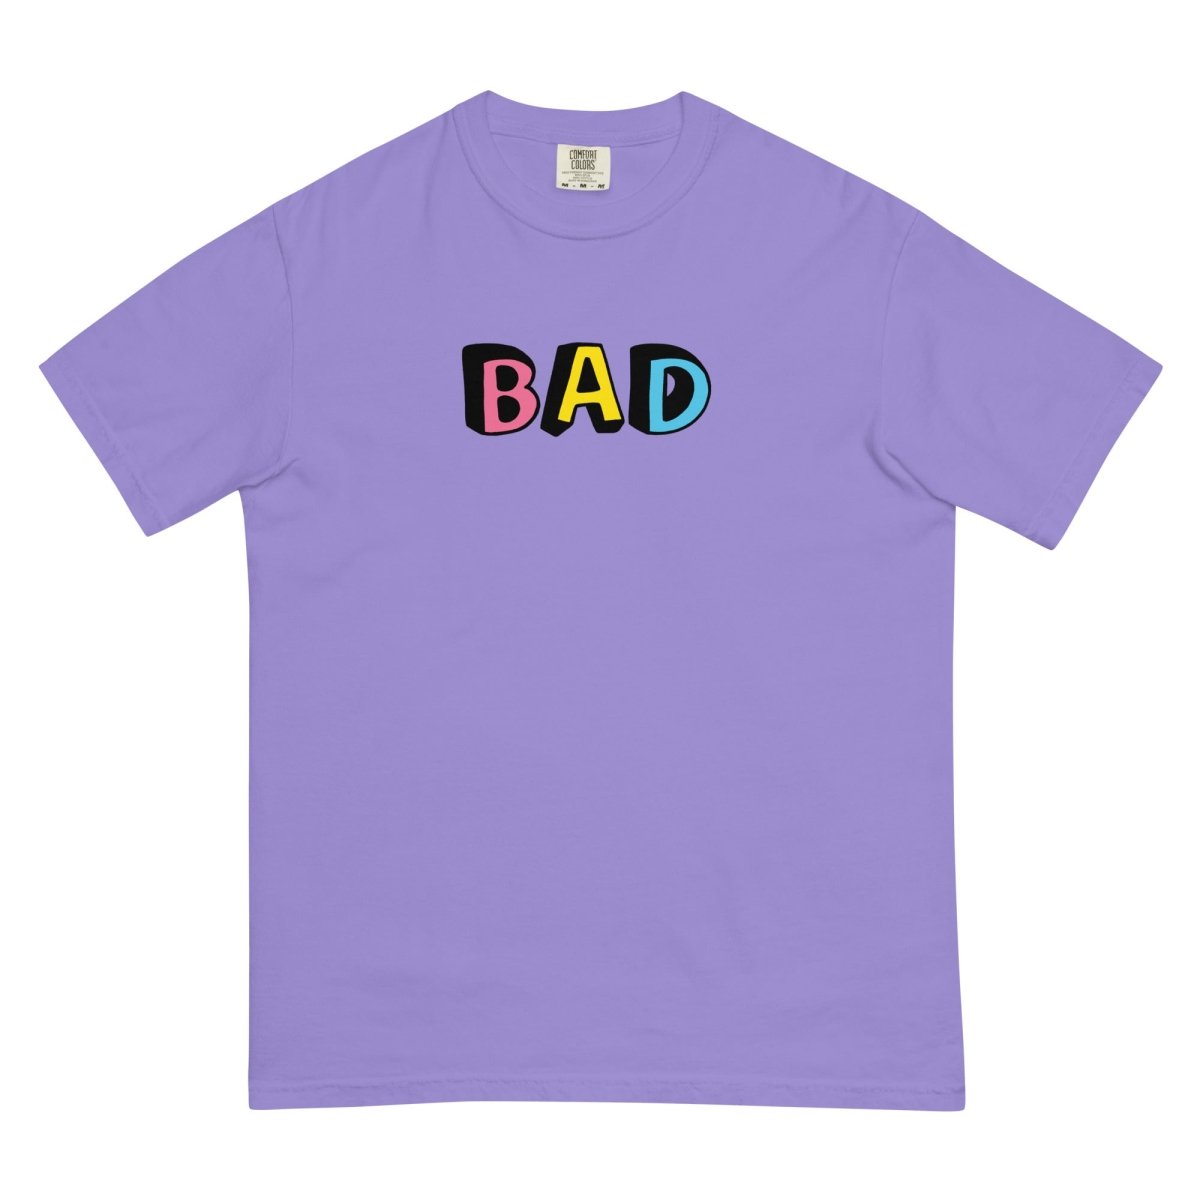 BAD garment-dyed t-shirt - T-Shirt - Pretty Bad Co.